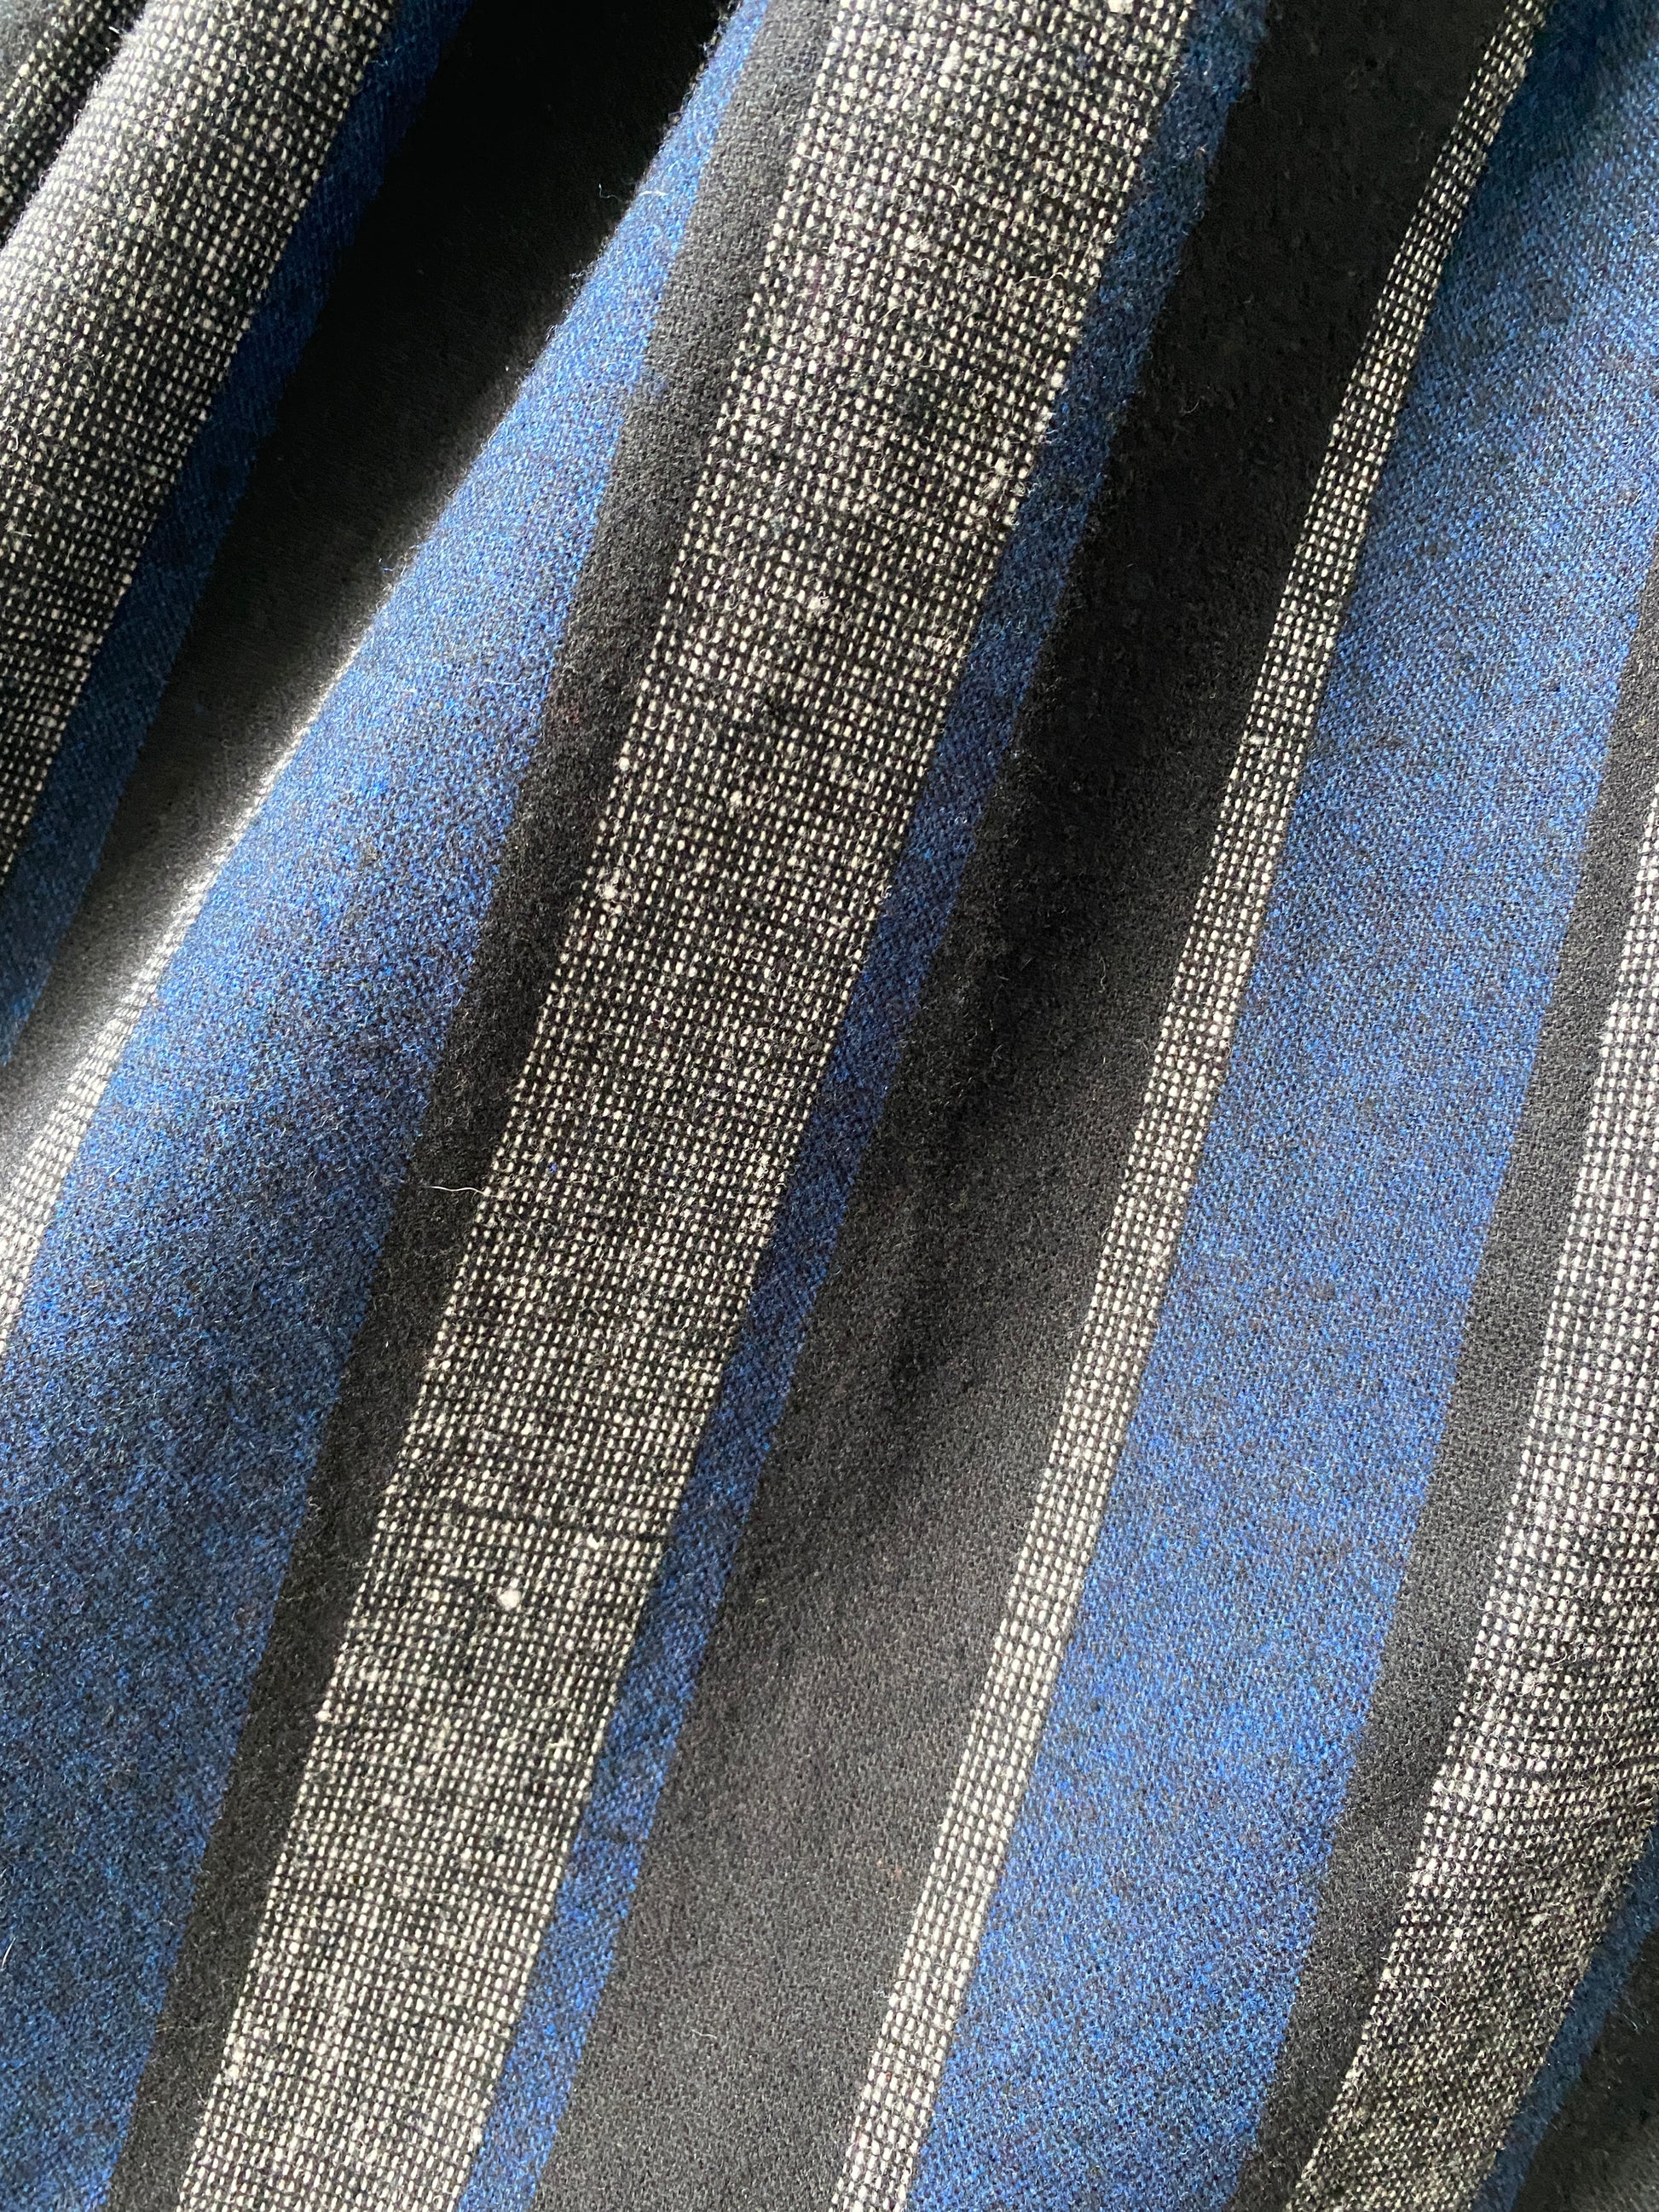 Vintage 1980s Black & Blue Stripe Wool Invert Pleat Skirt, W27"